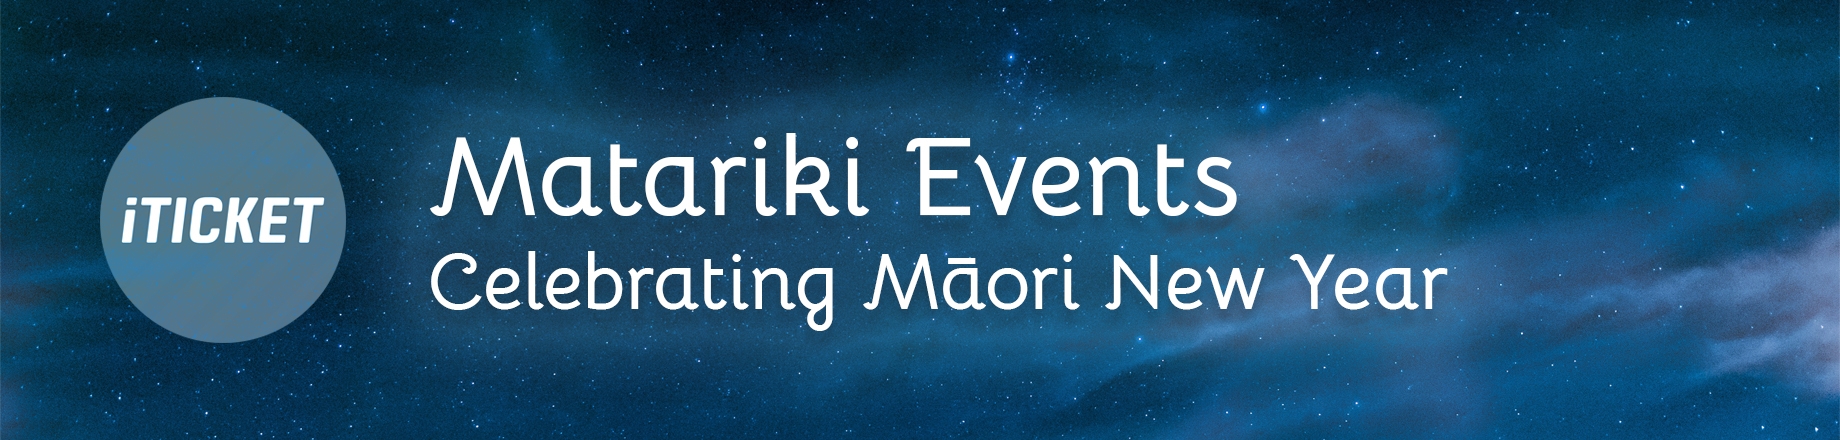 Matariki Events